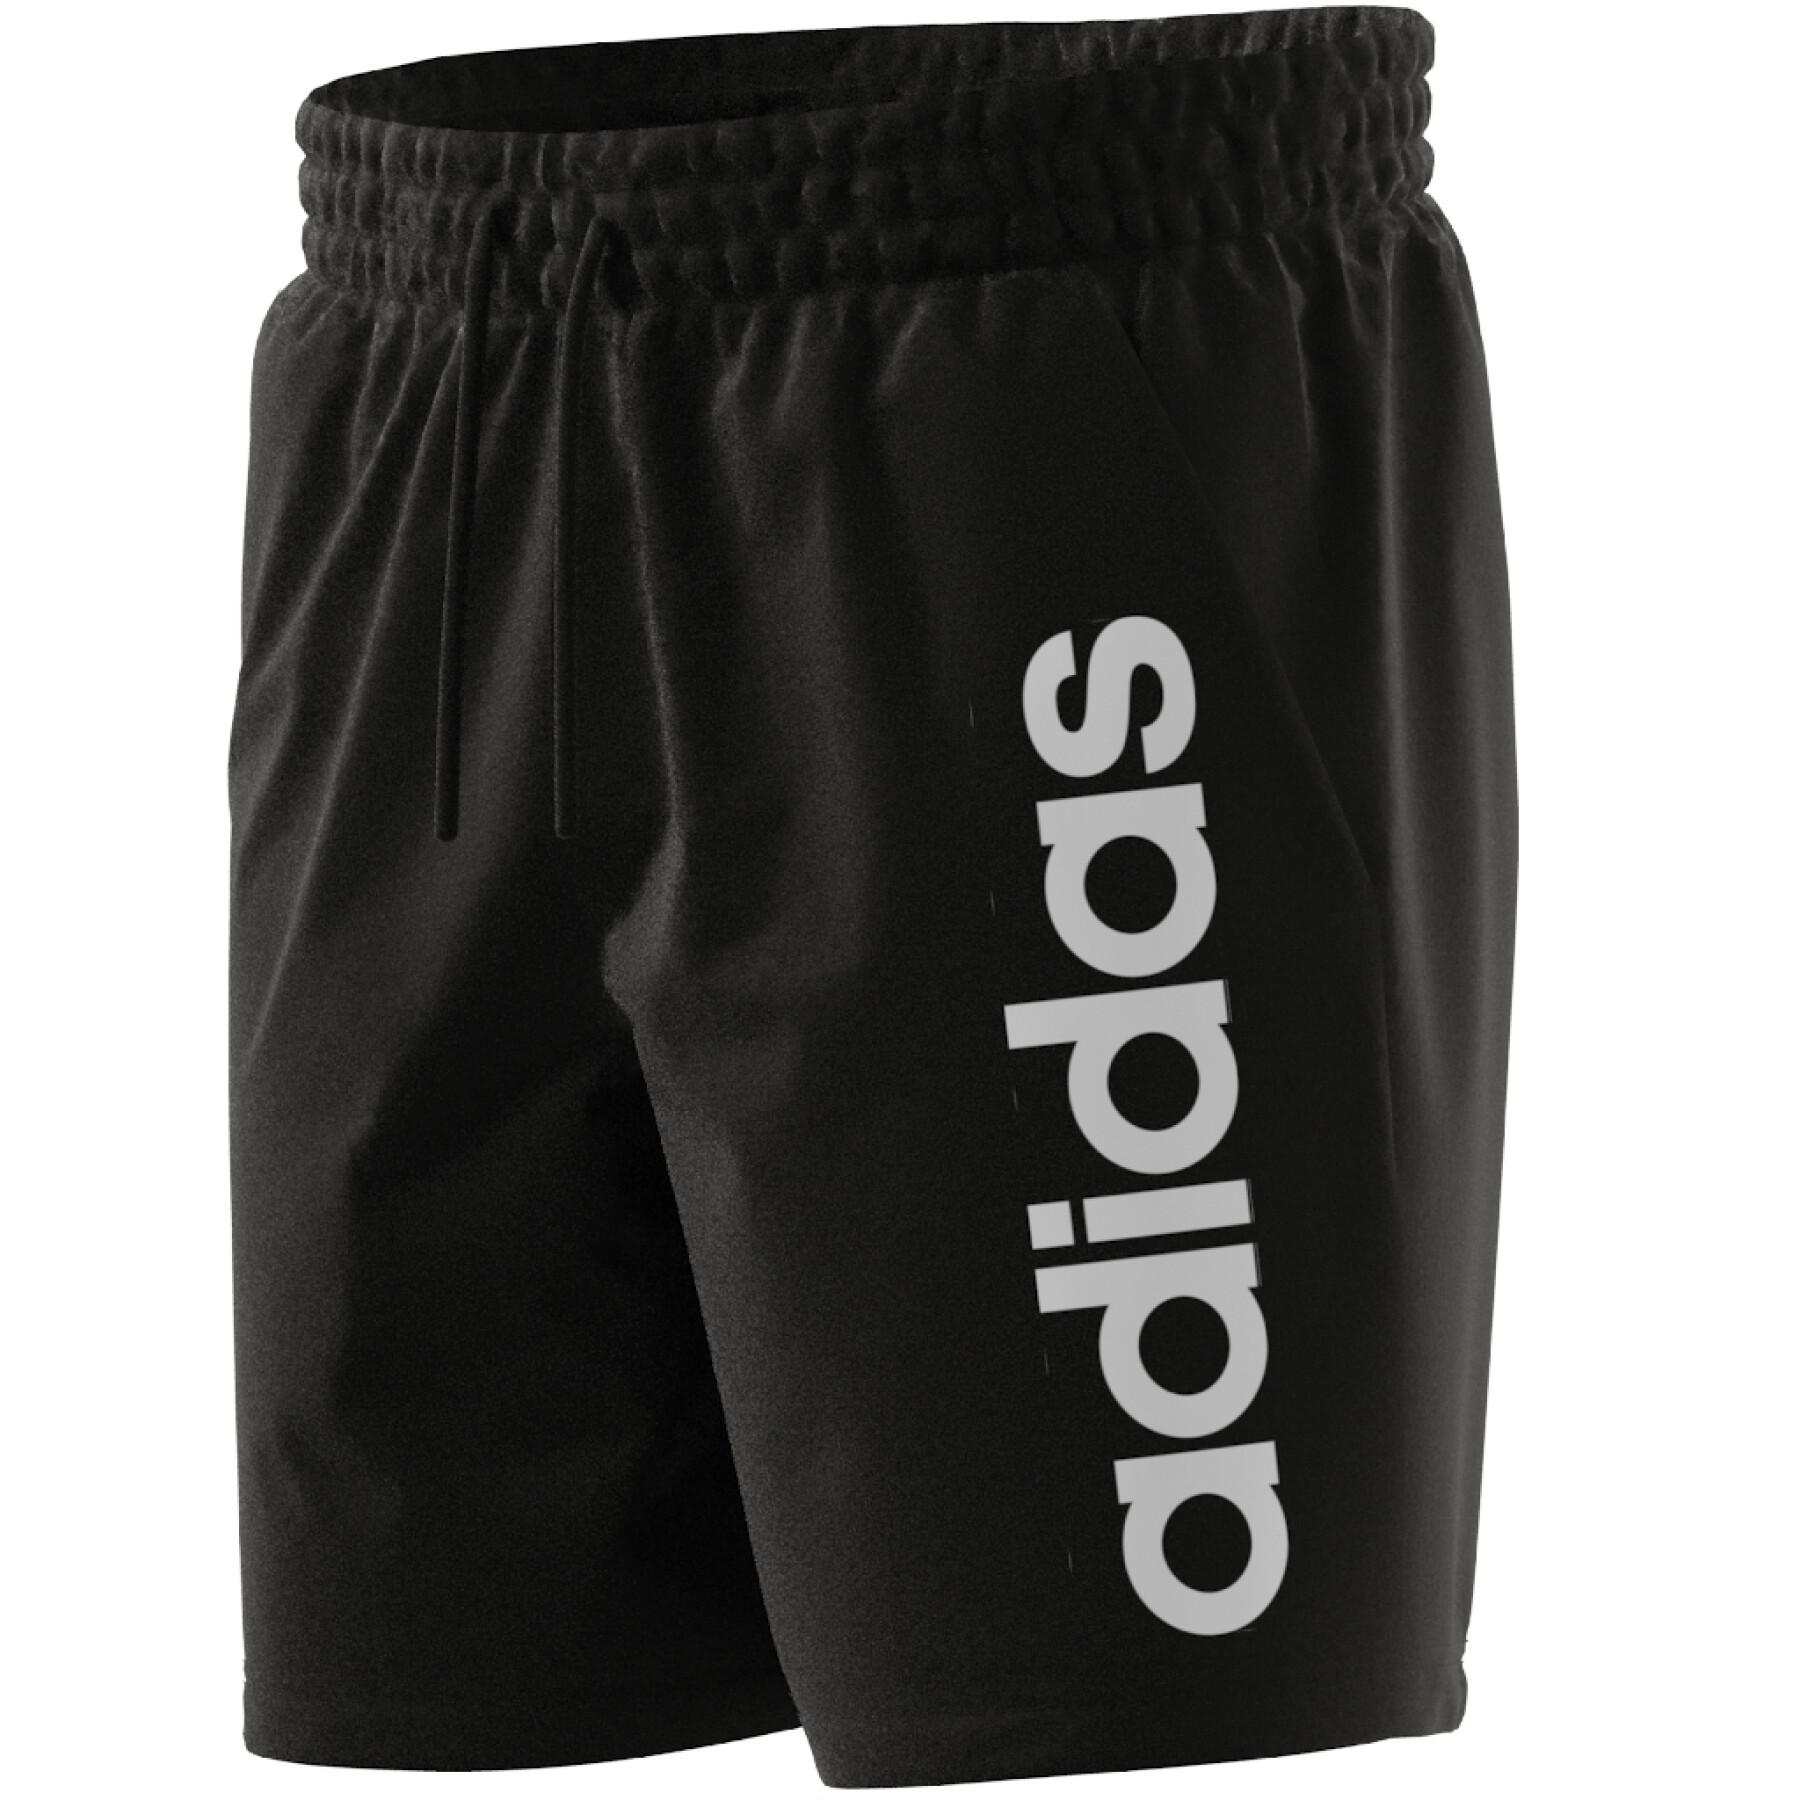 Linear logo shorts adidas Chelsea Aeroready Essentials